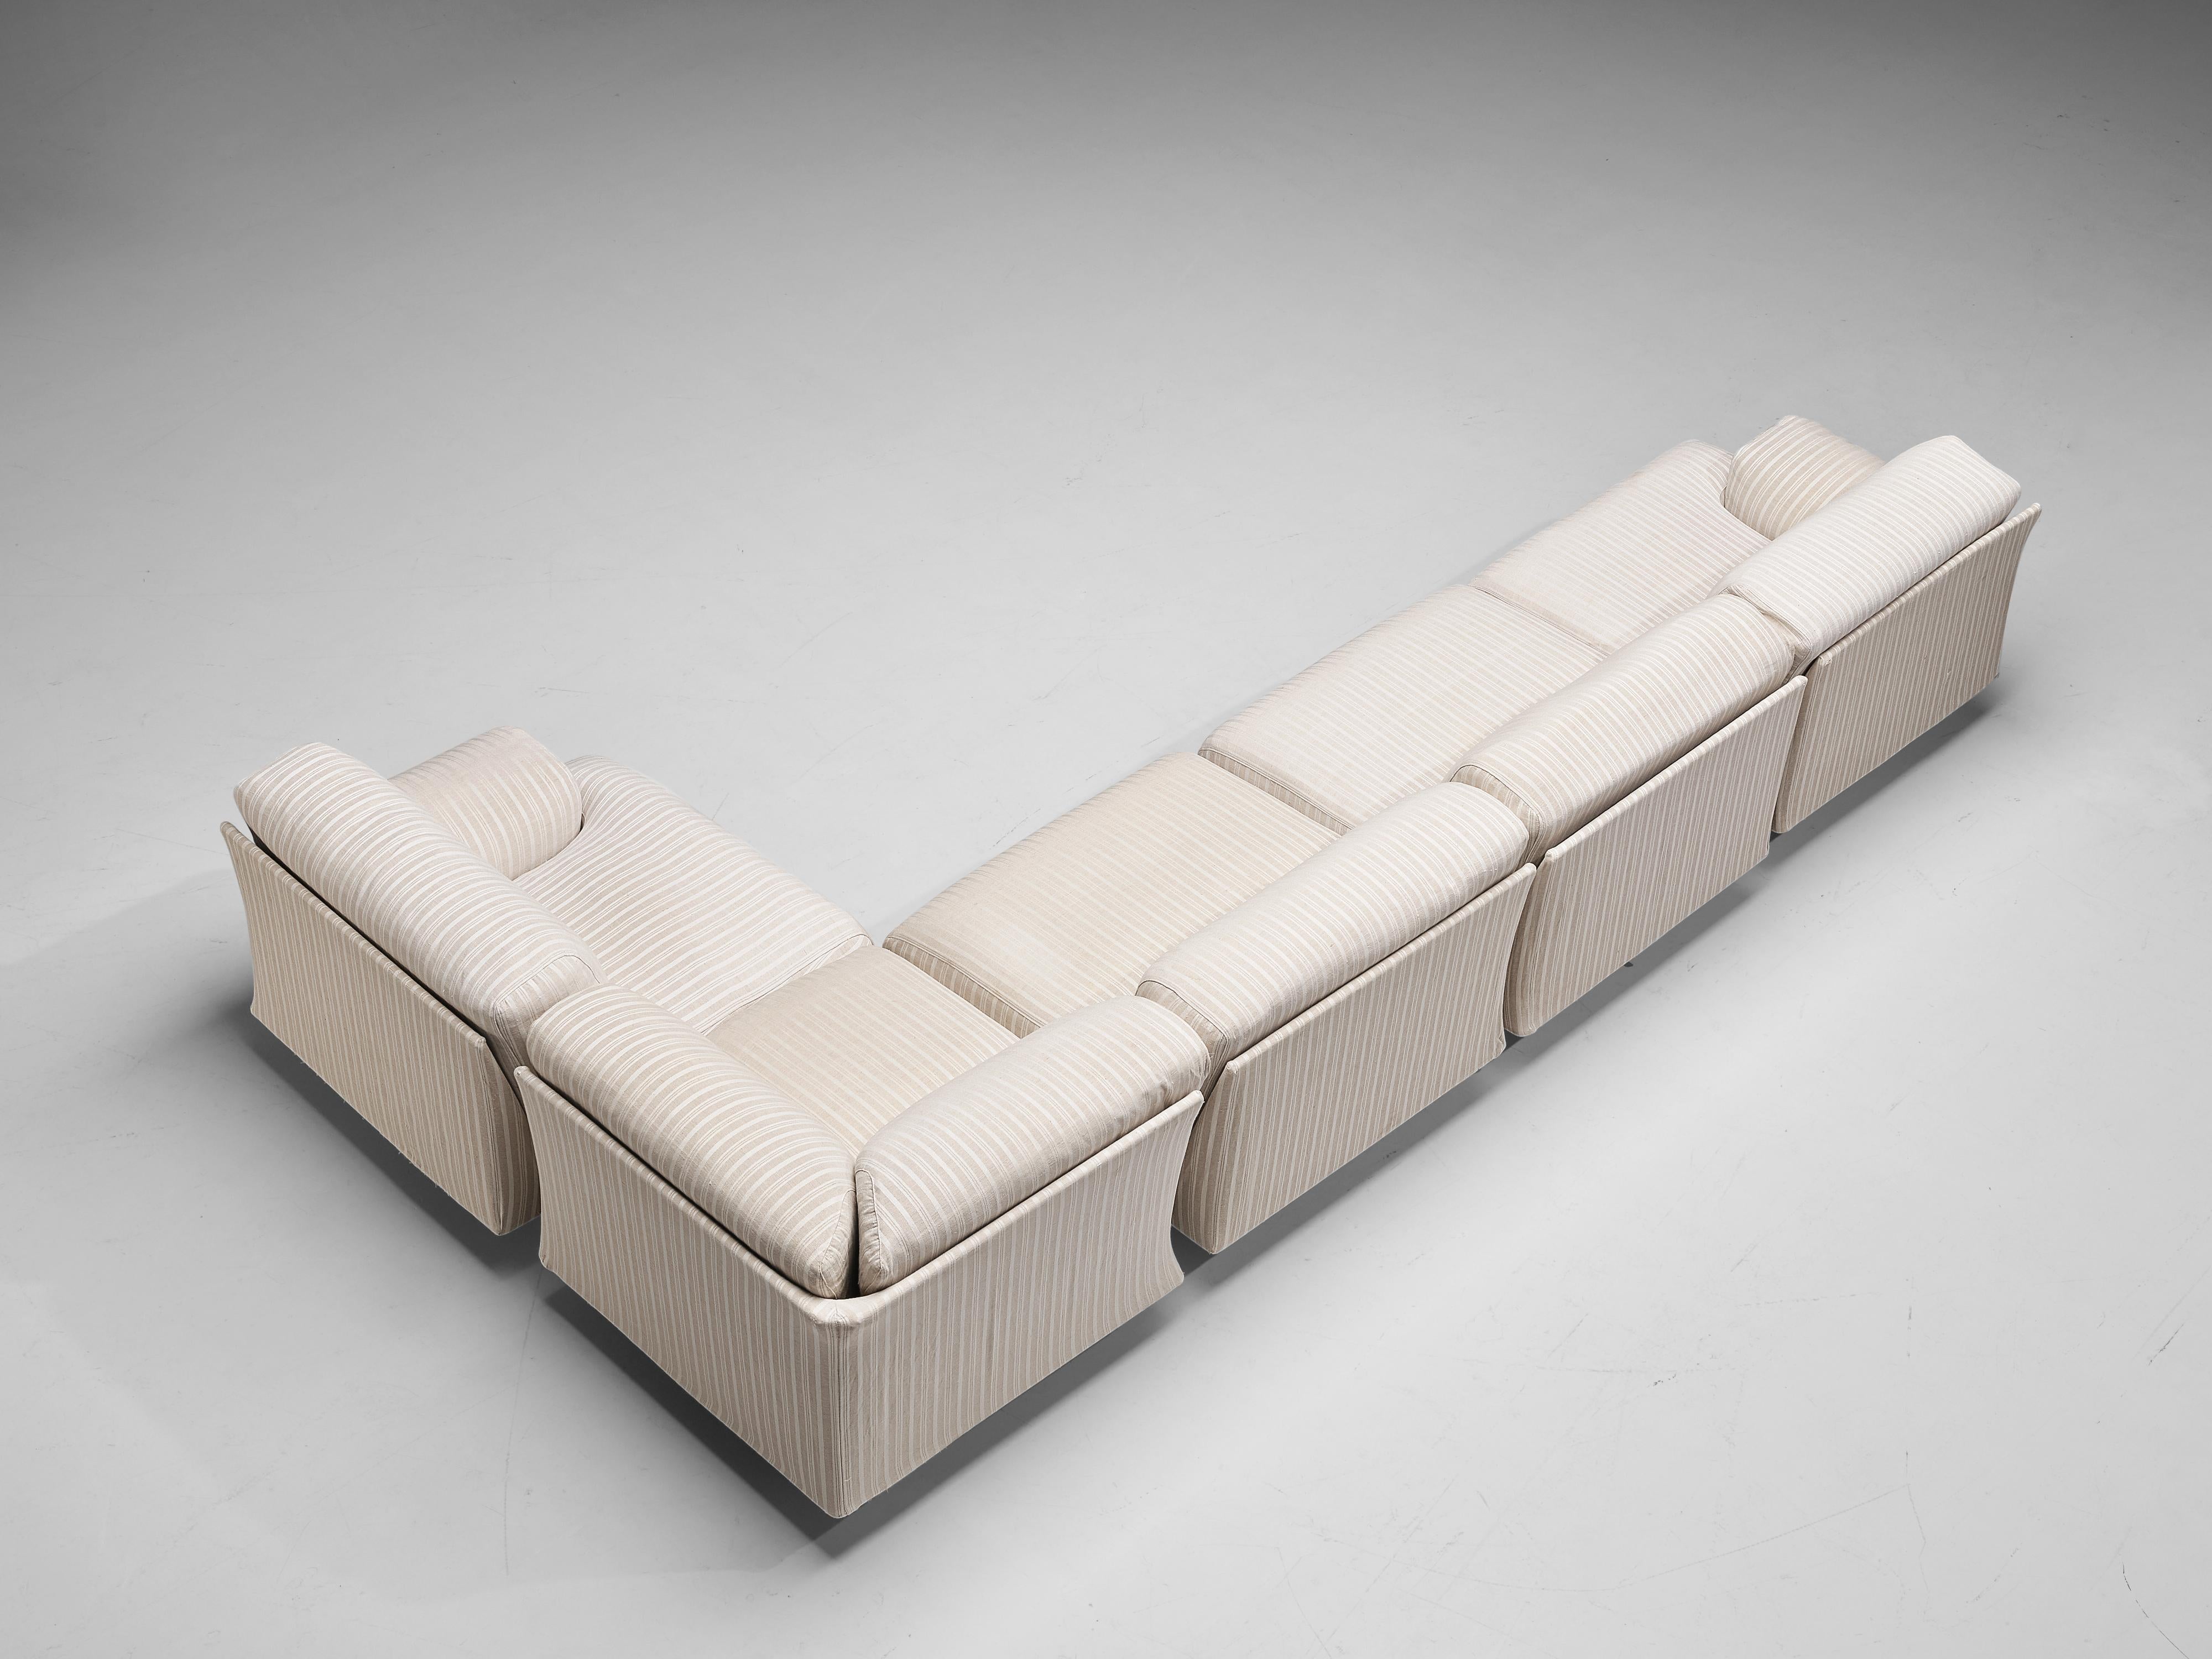 Late 20th Century Vico Magistretti ‘Fiandra’ Sectional Sofa in Striped Upholstery